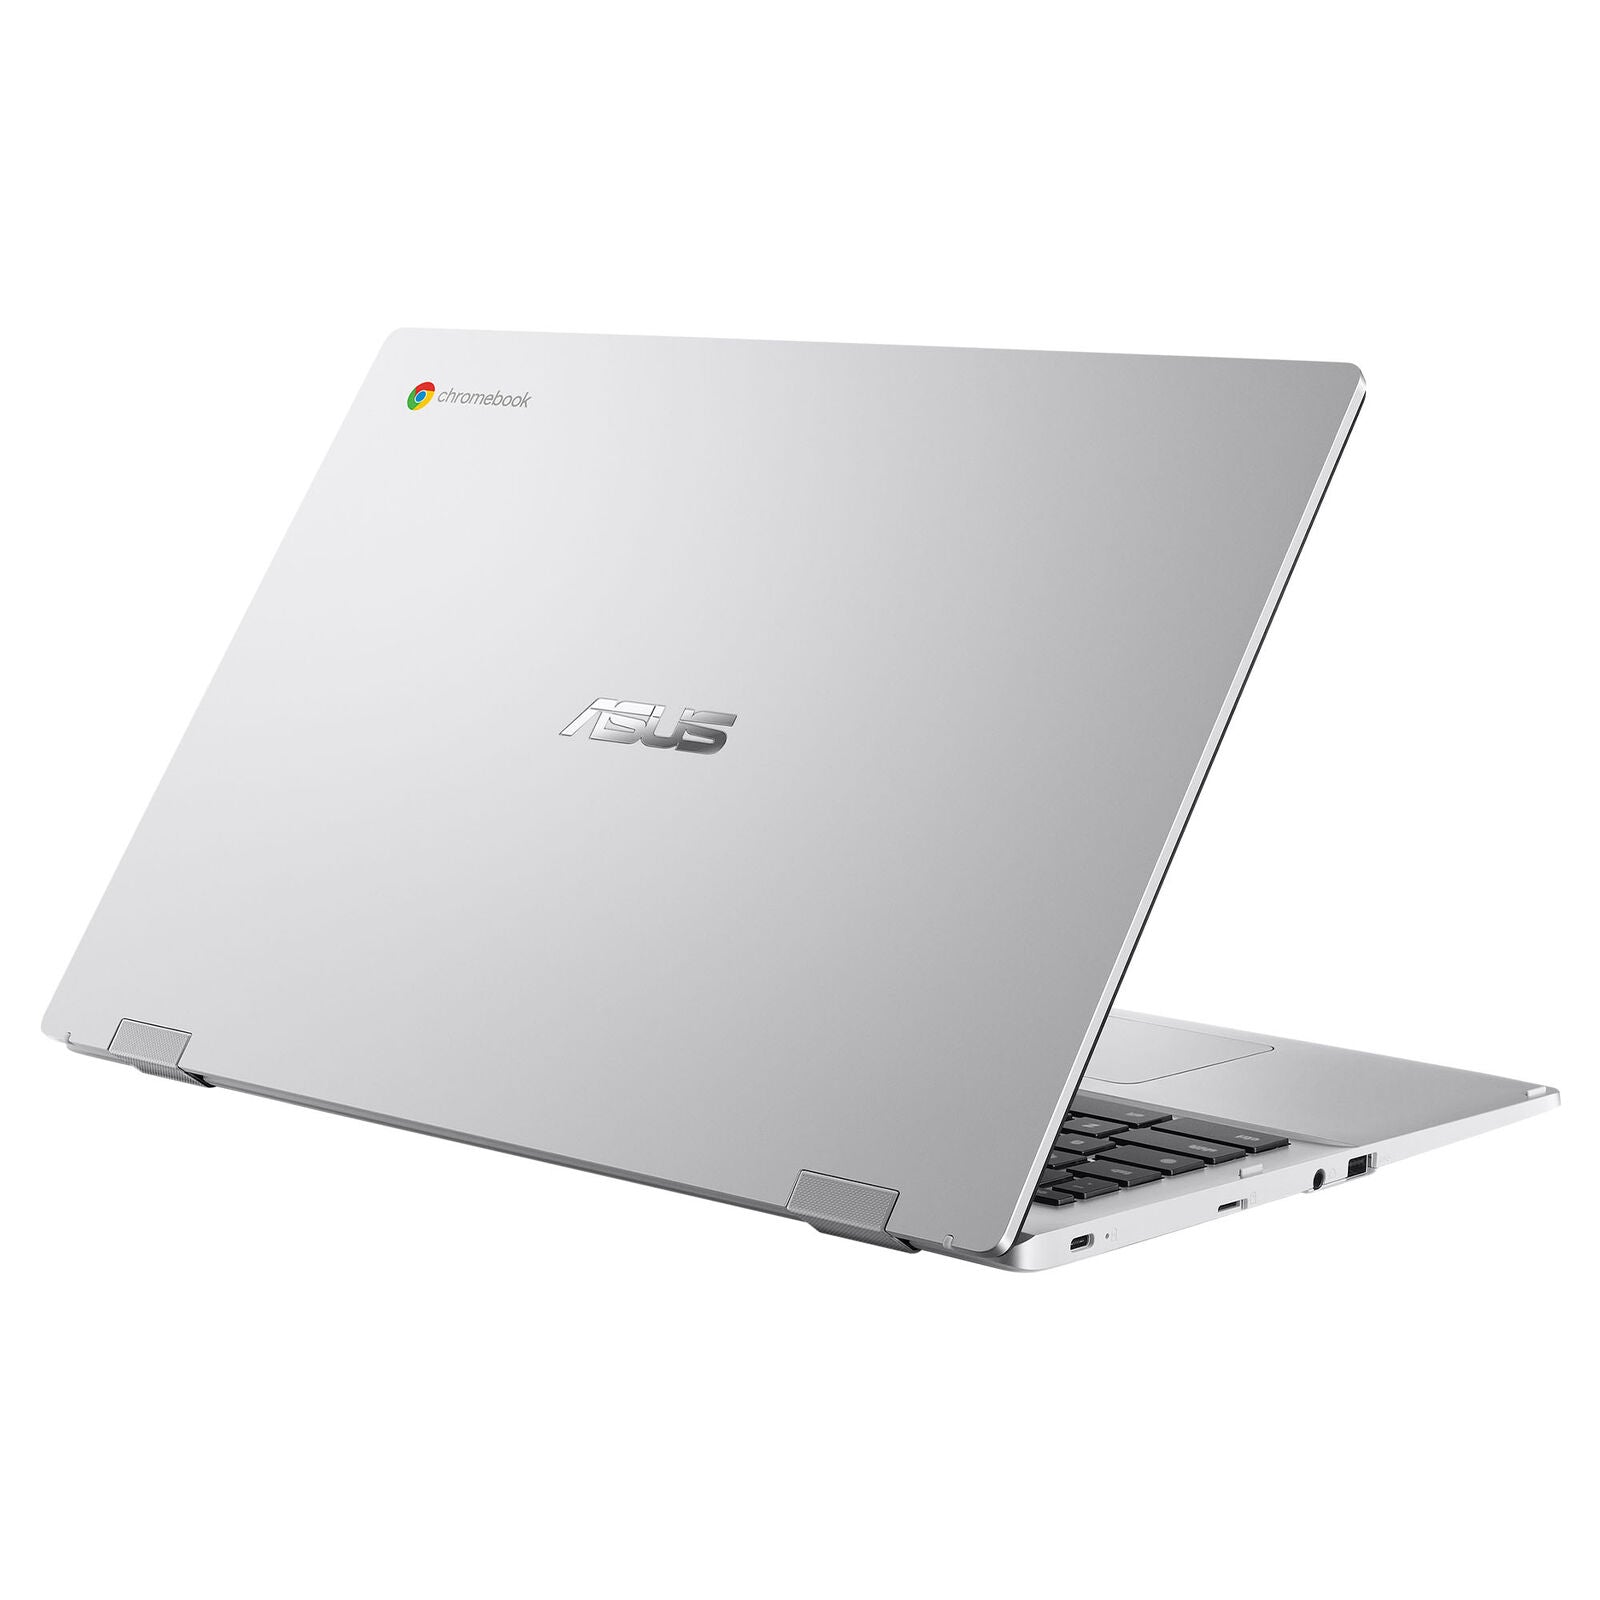 Asus Laptop 15.6" HD Intel Celeron 4/128GB/AX Chromebook